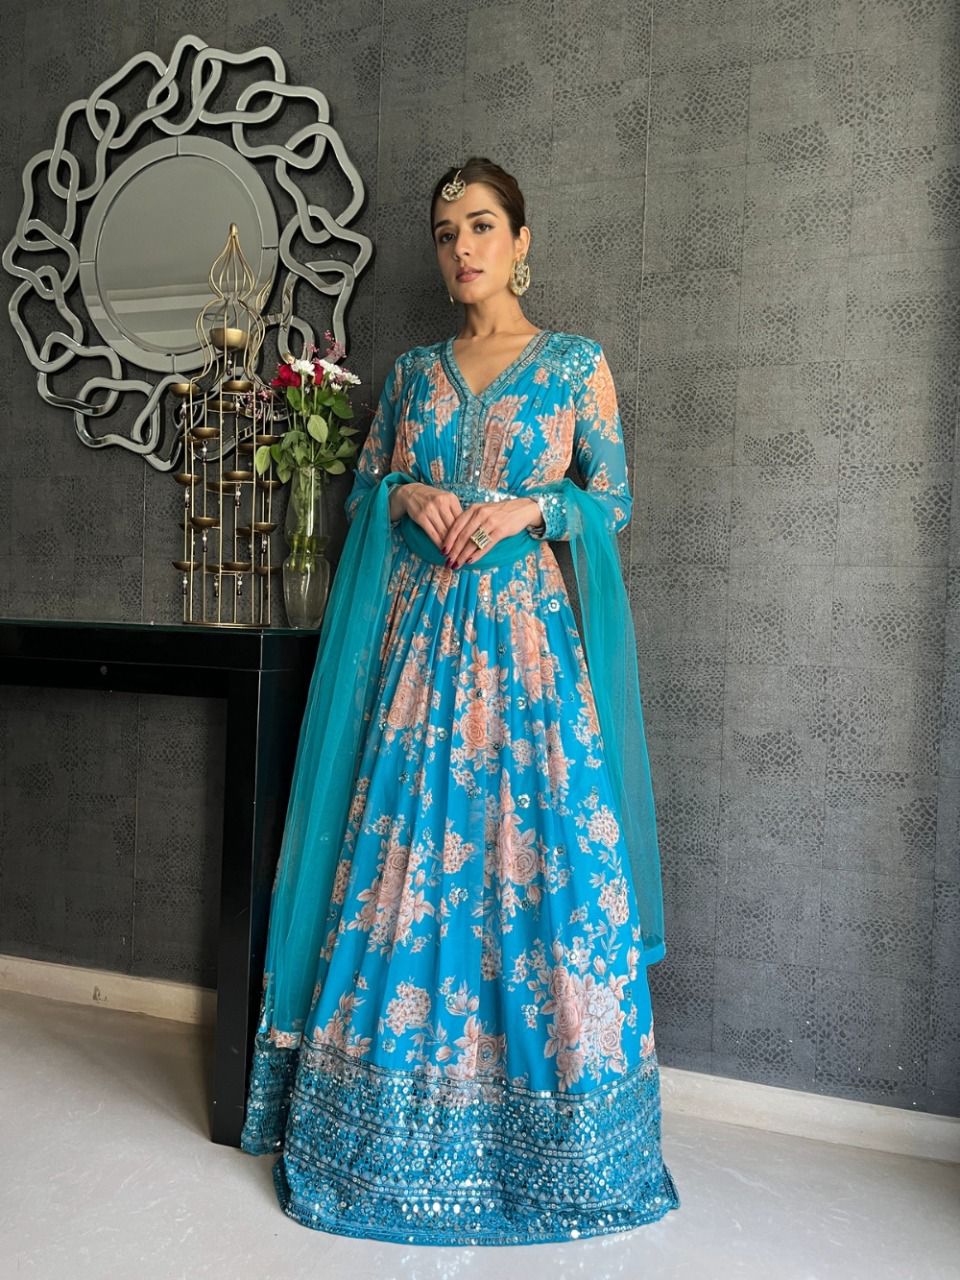 Beautiful Designer Long Gown At Affordable Price – Joshindia